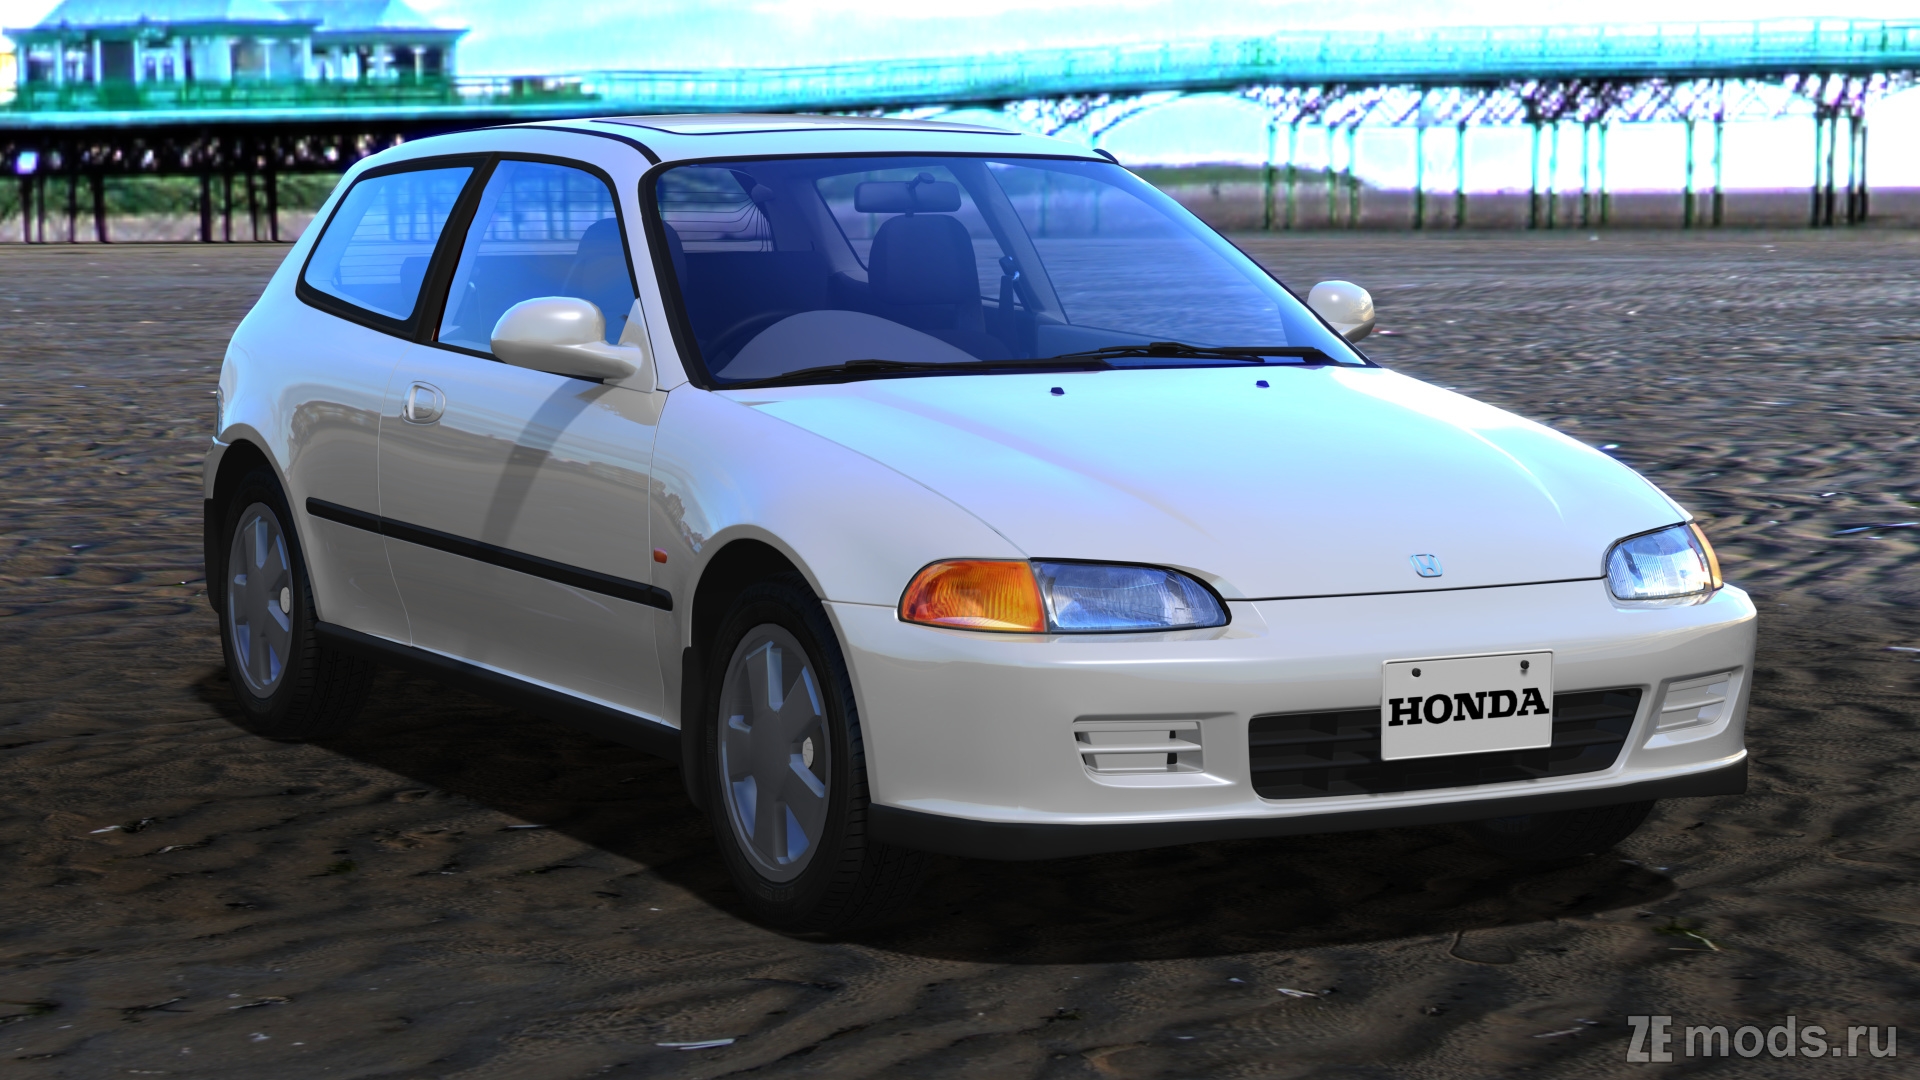 Мод Honda Civic eg6 версия REV 3a для Assetto Corsa